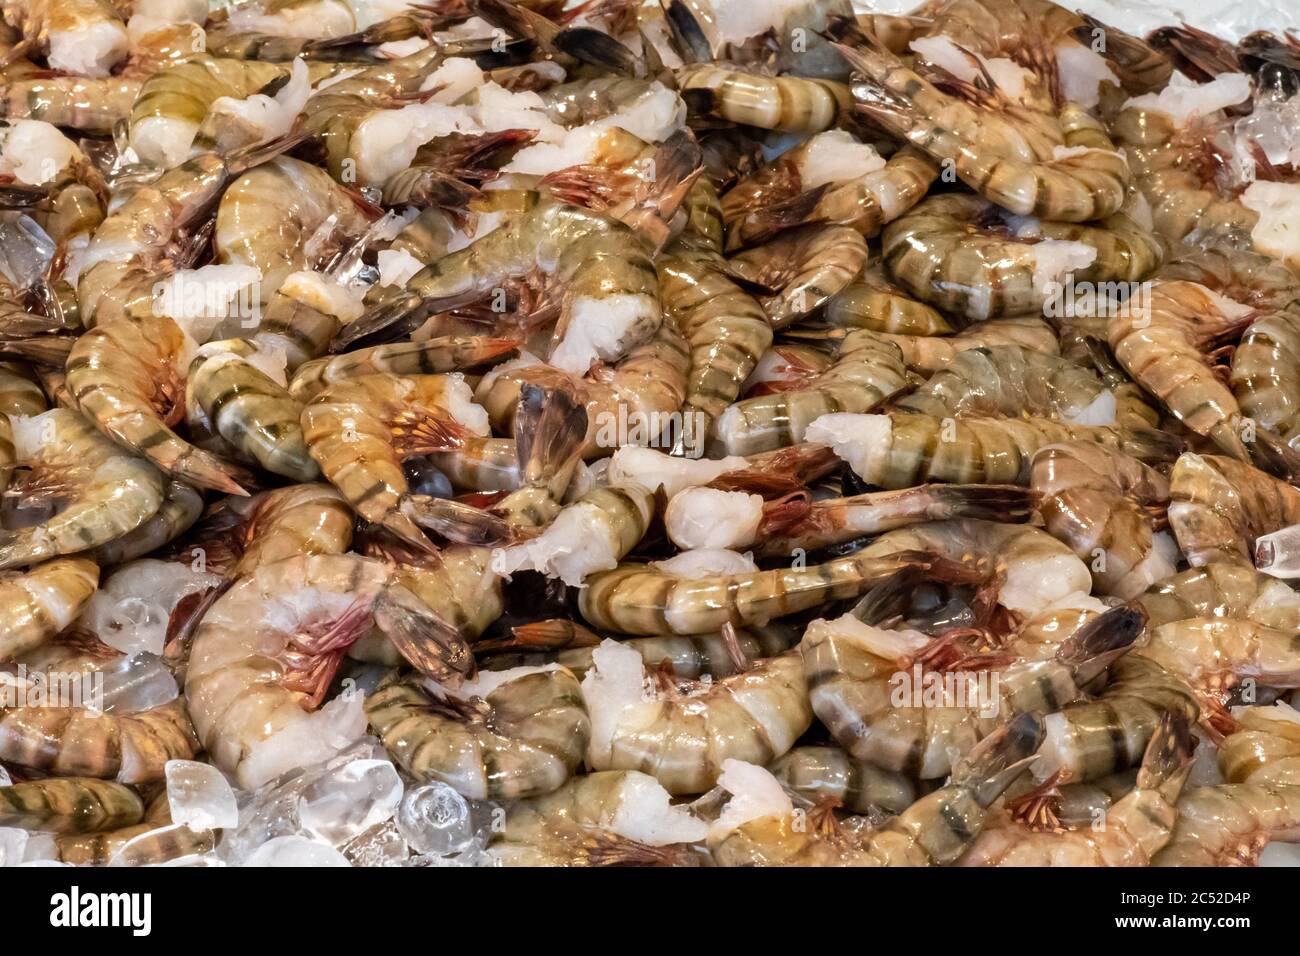 Fish market raw shrimp by the kilo or pound hi-res stock